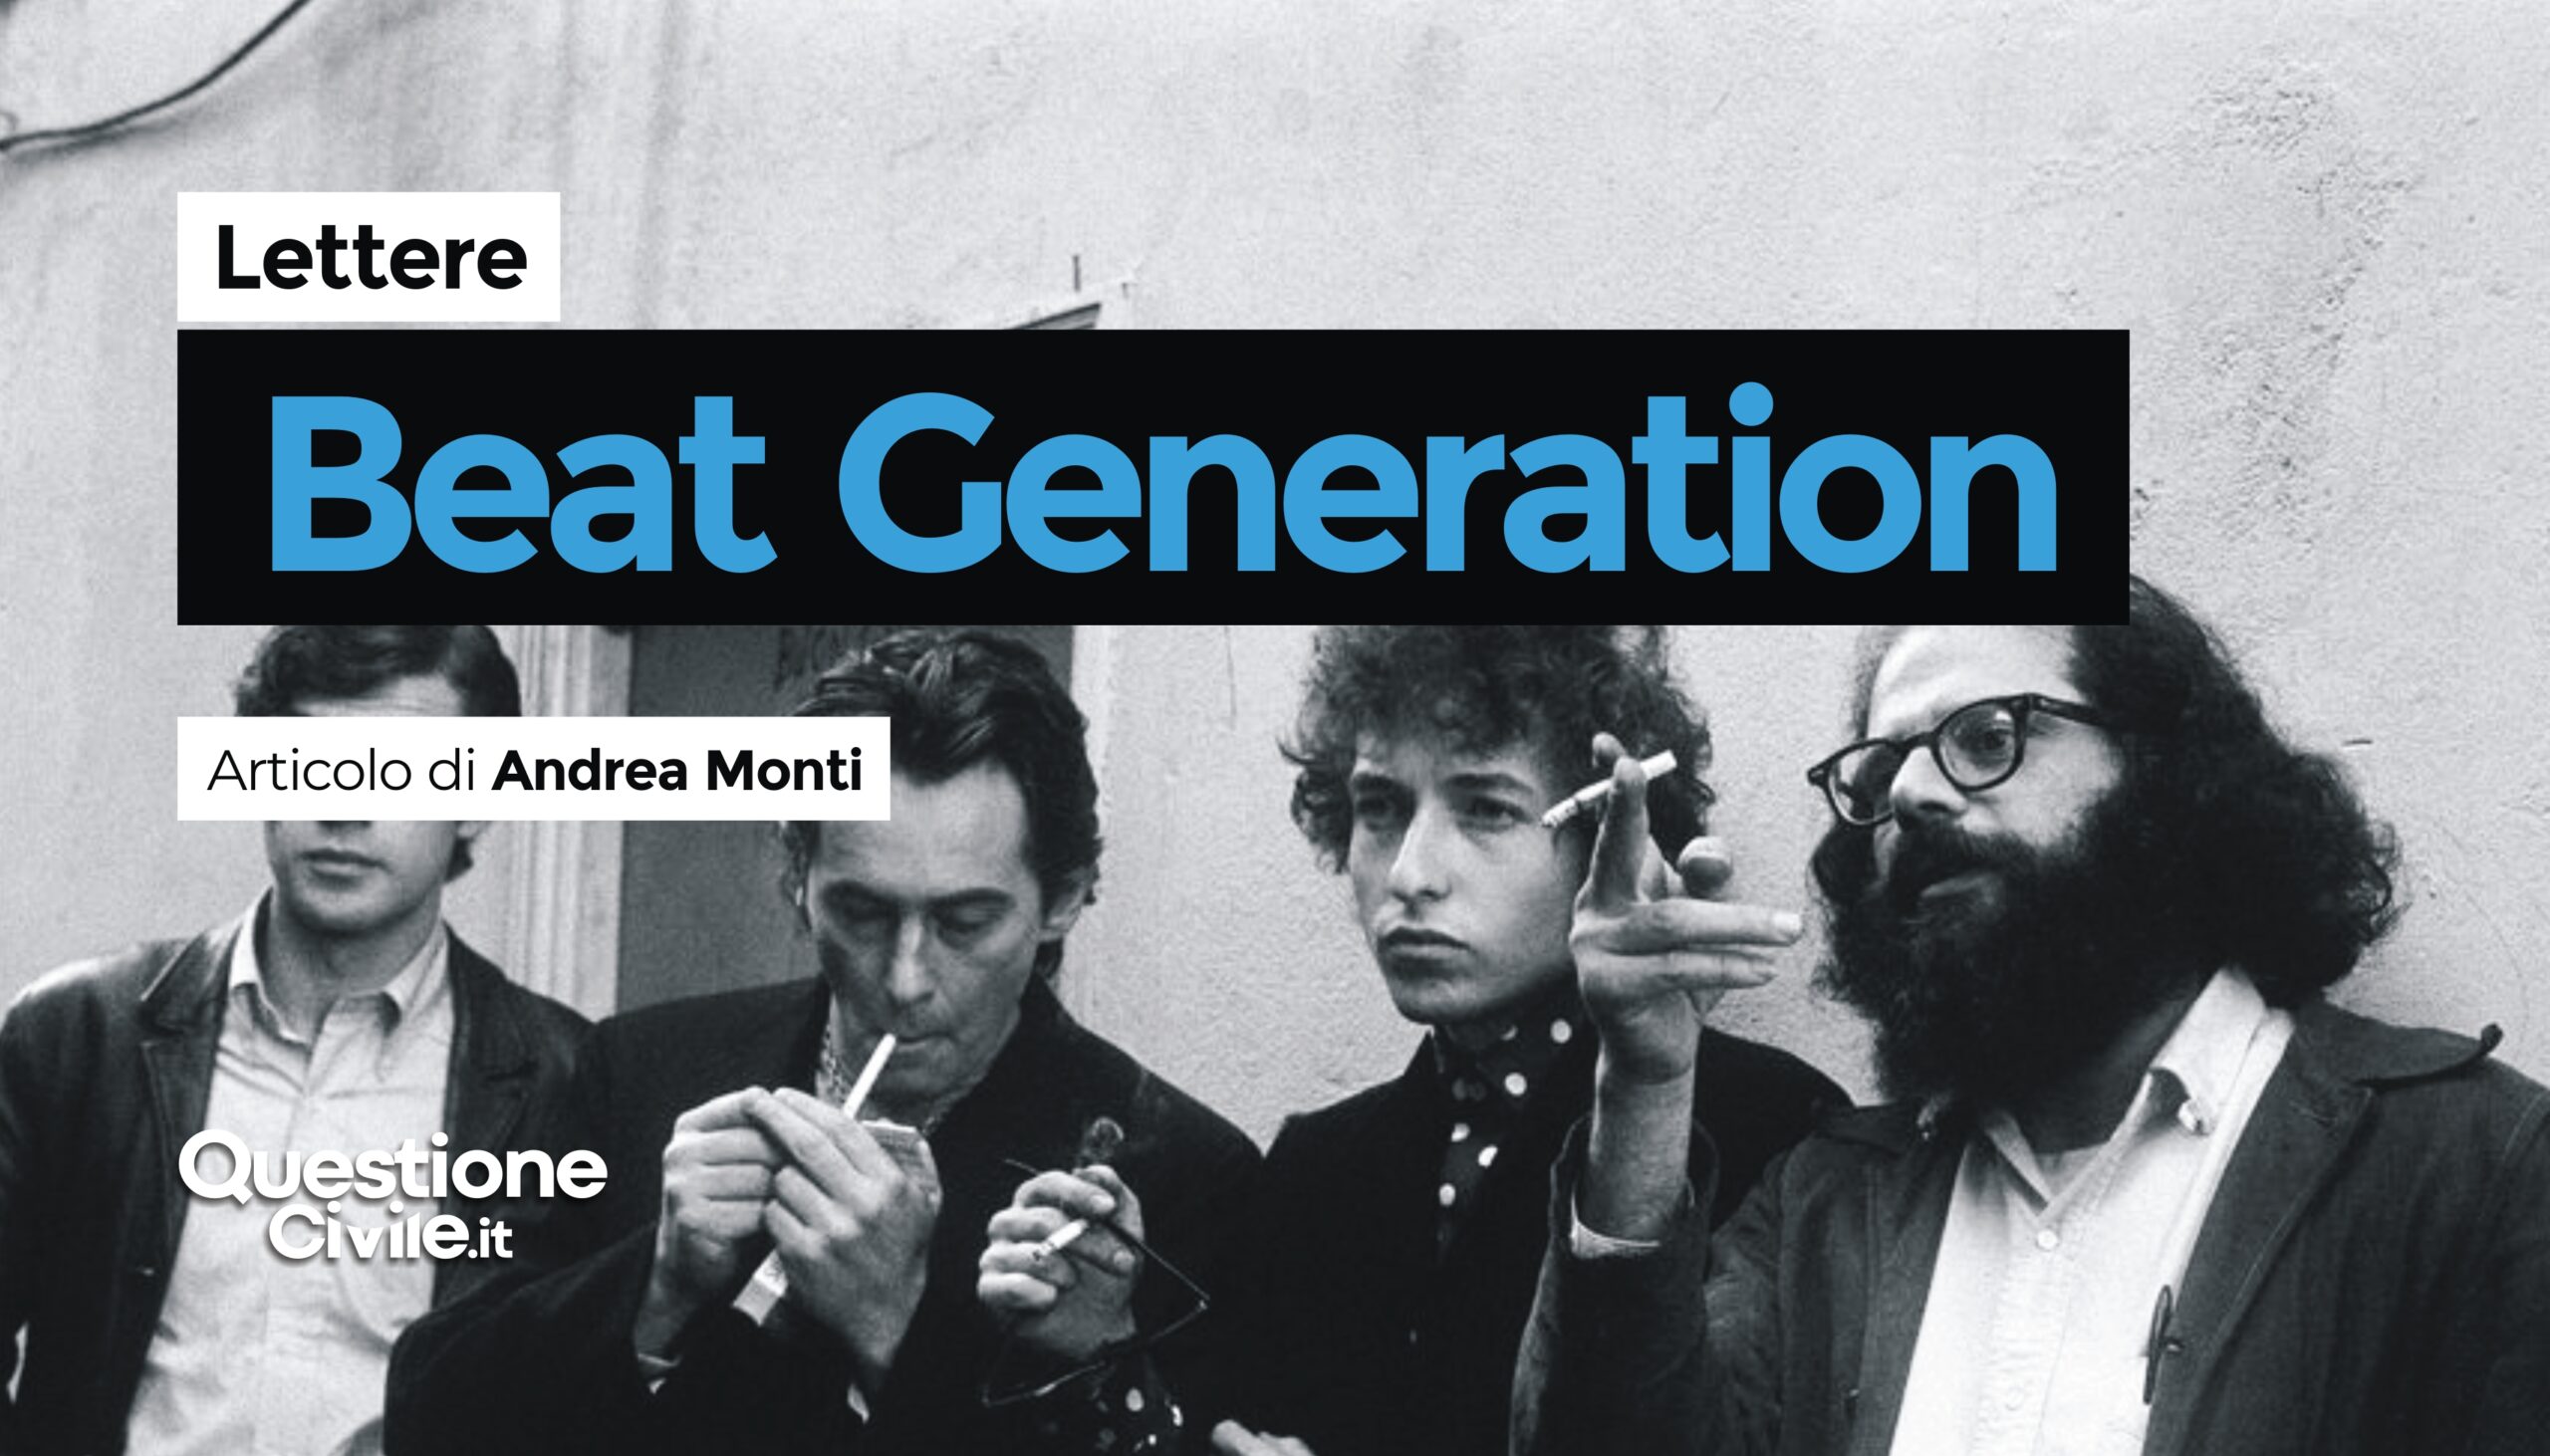 Beat generation